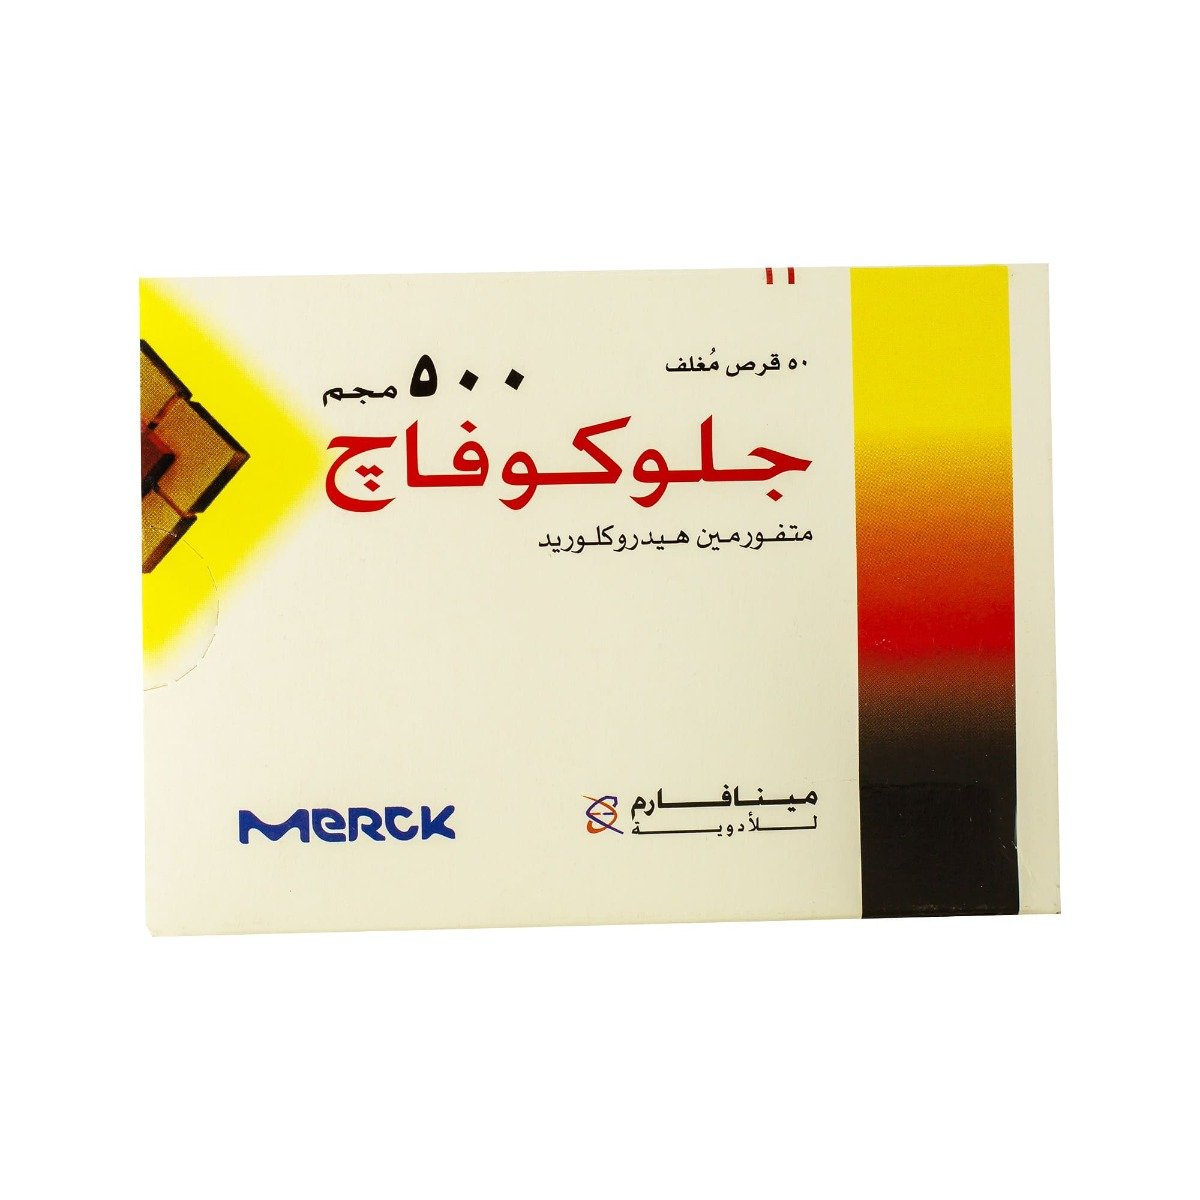 Glucophage 500 mg - 50 Tablets